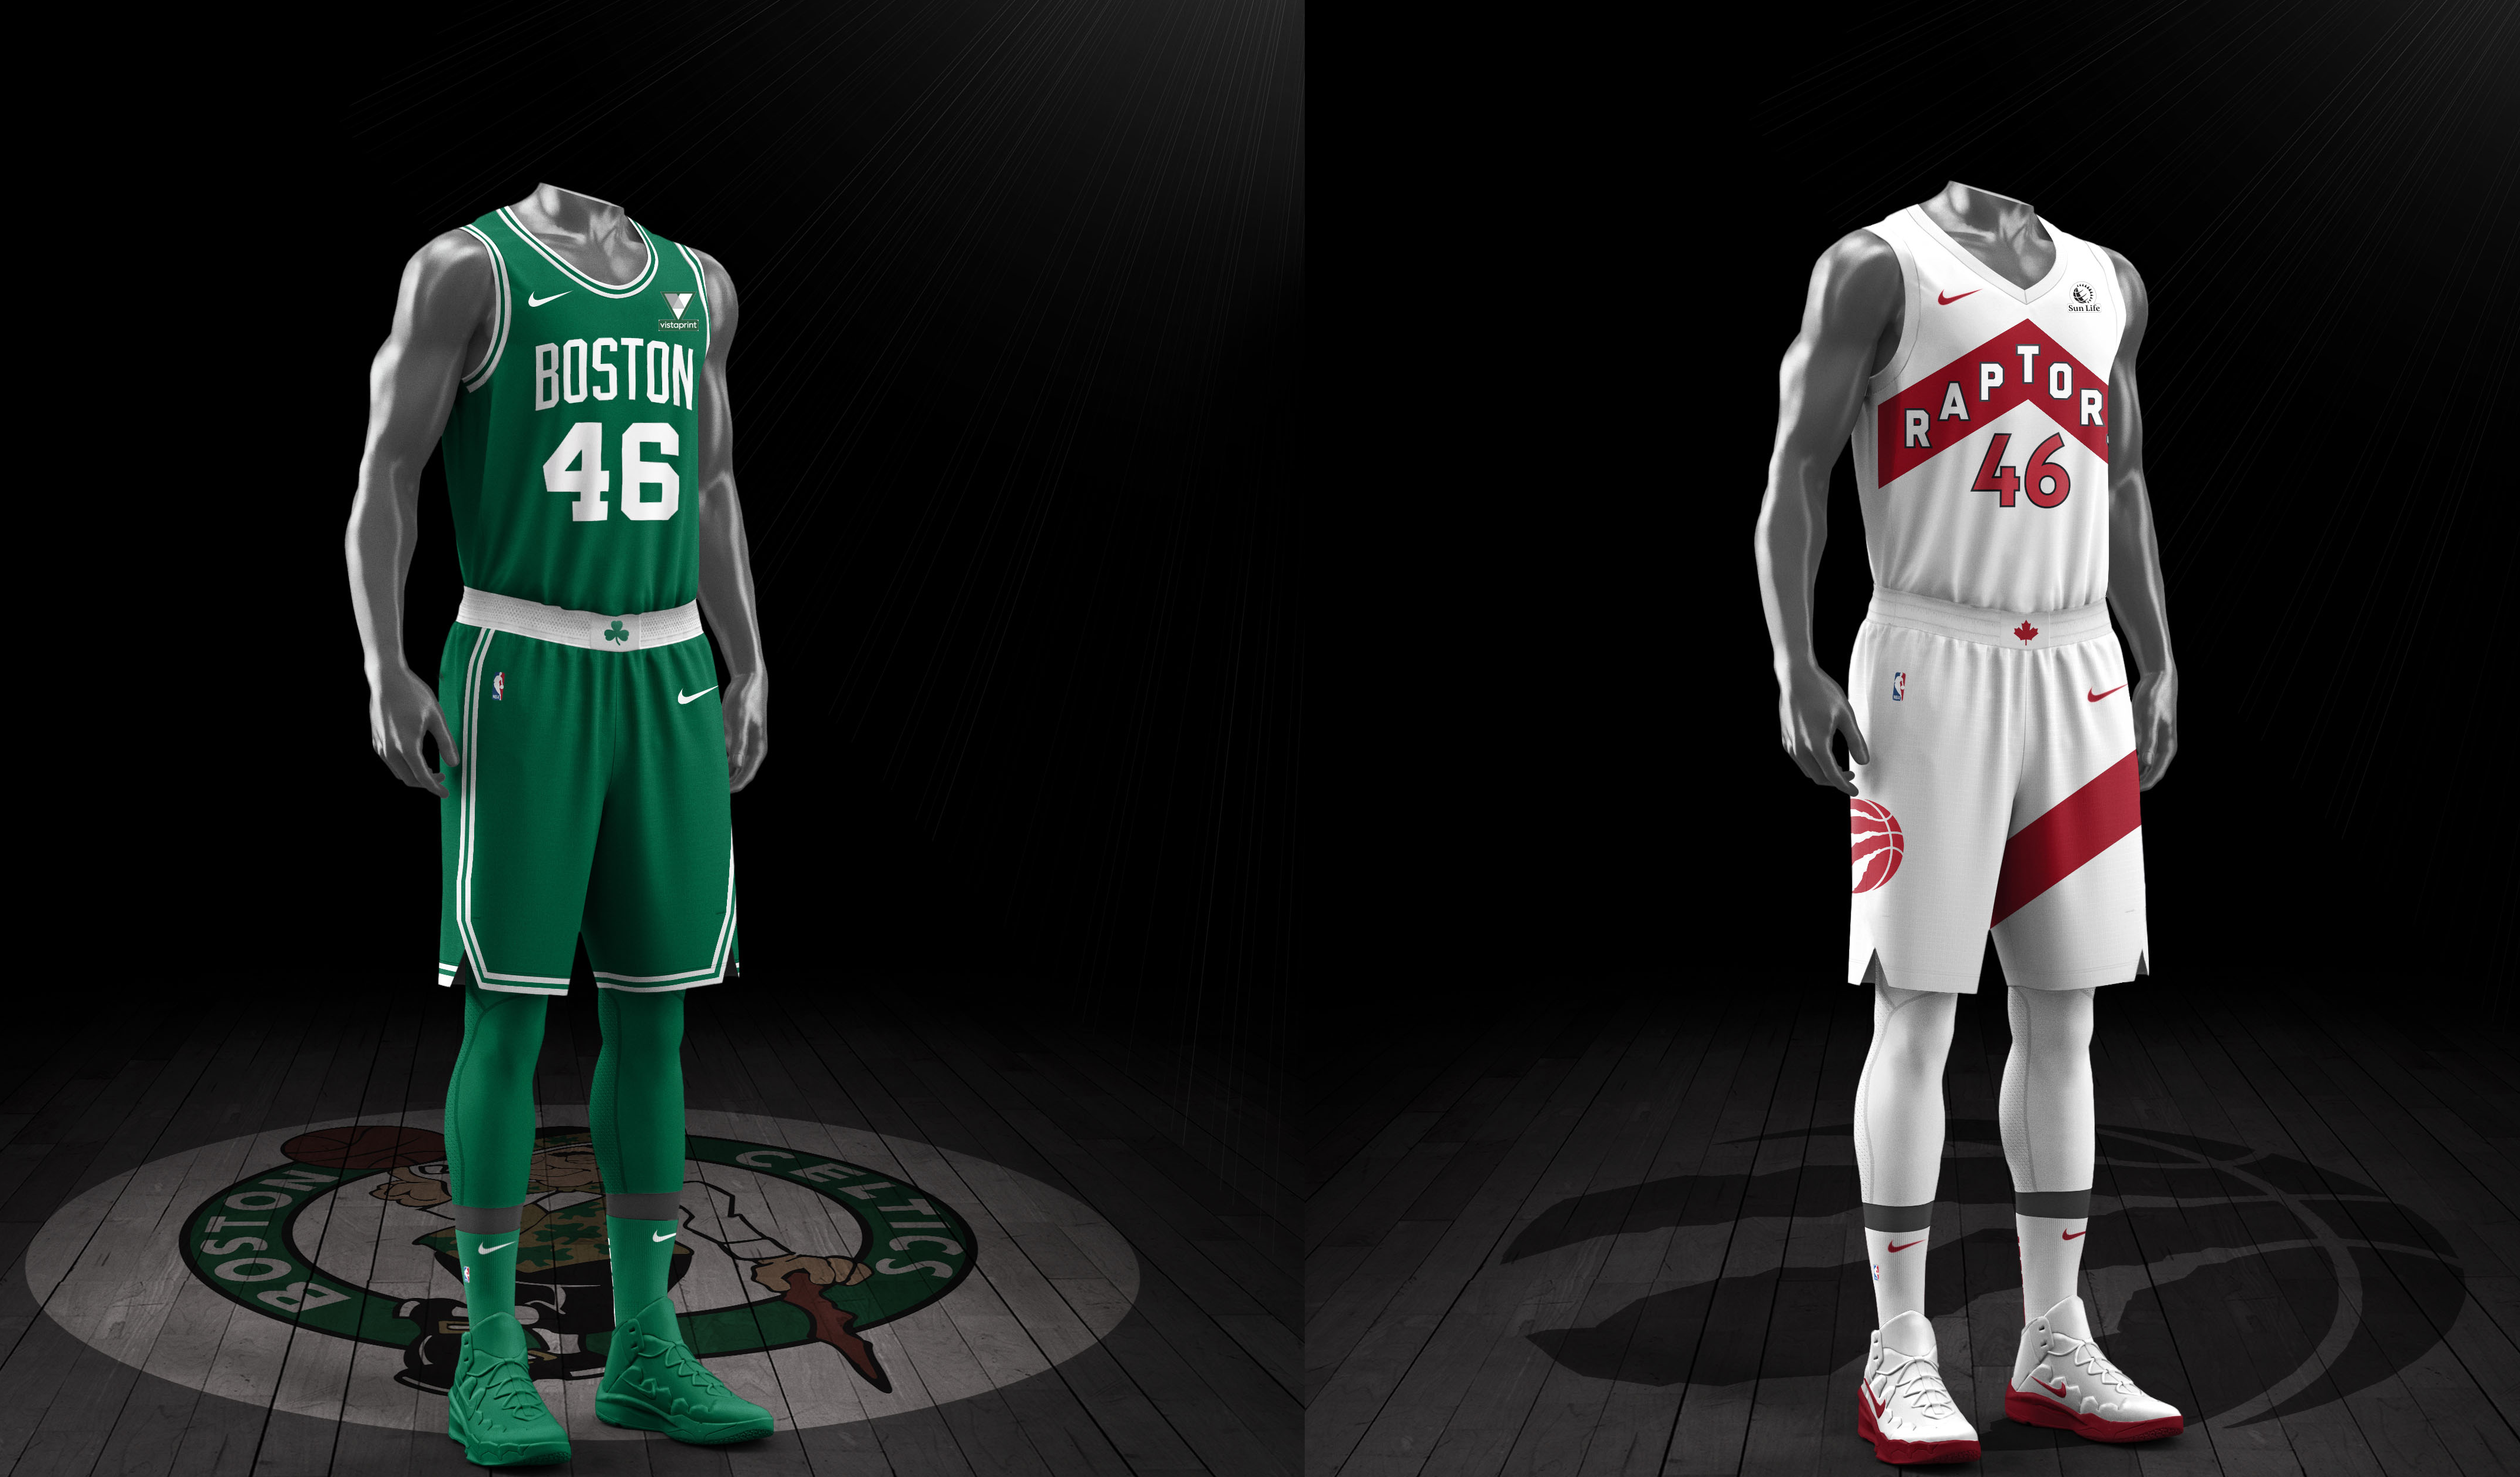 Boston Celtics vs. Toronto Raptors: Preview, officials, uniforms, injuries, odds